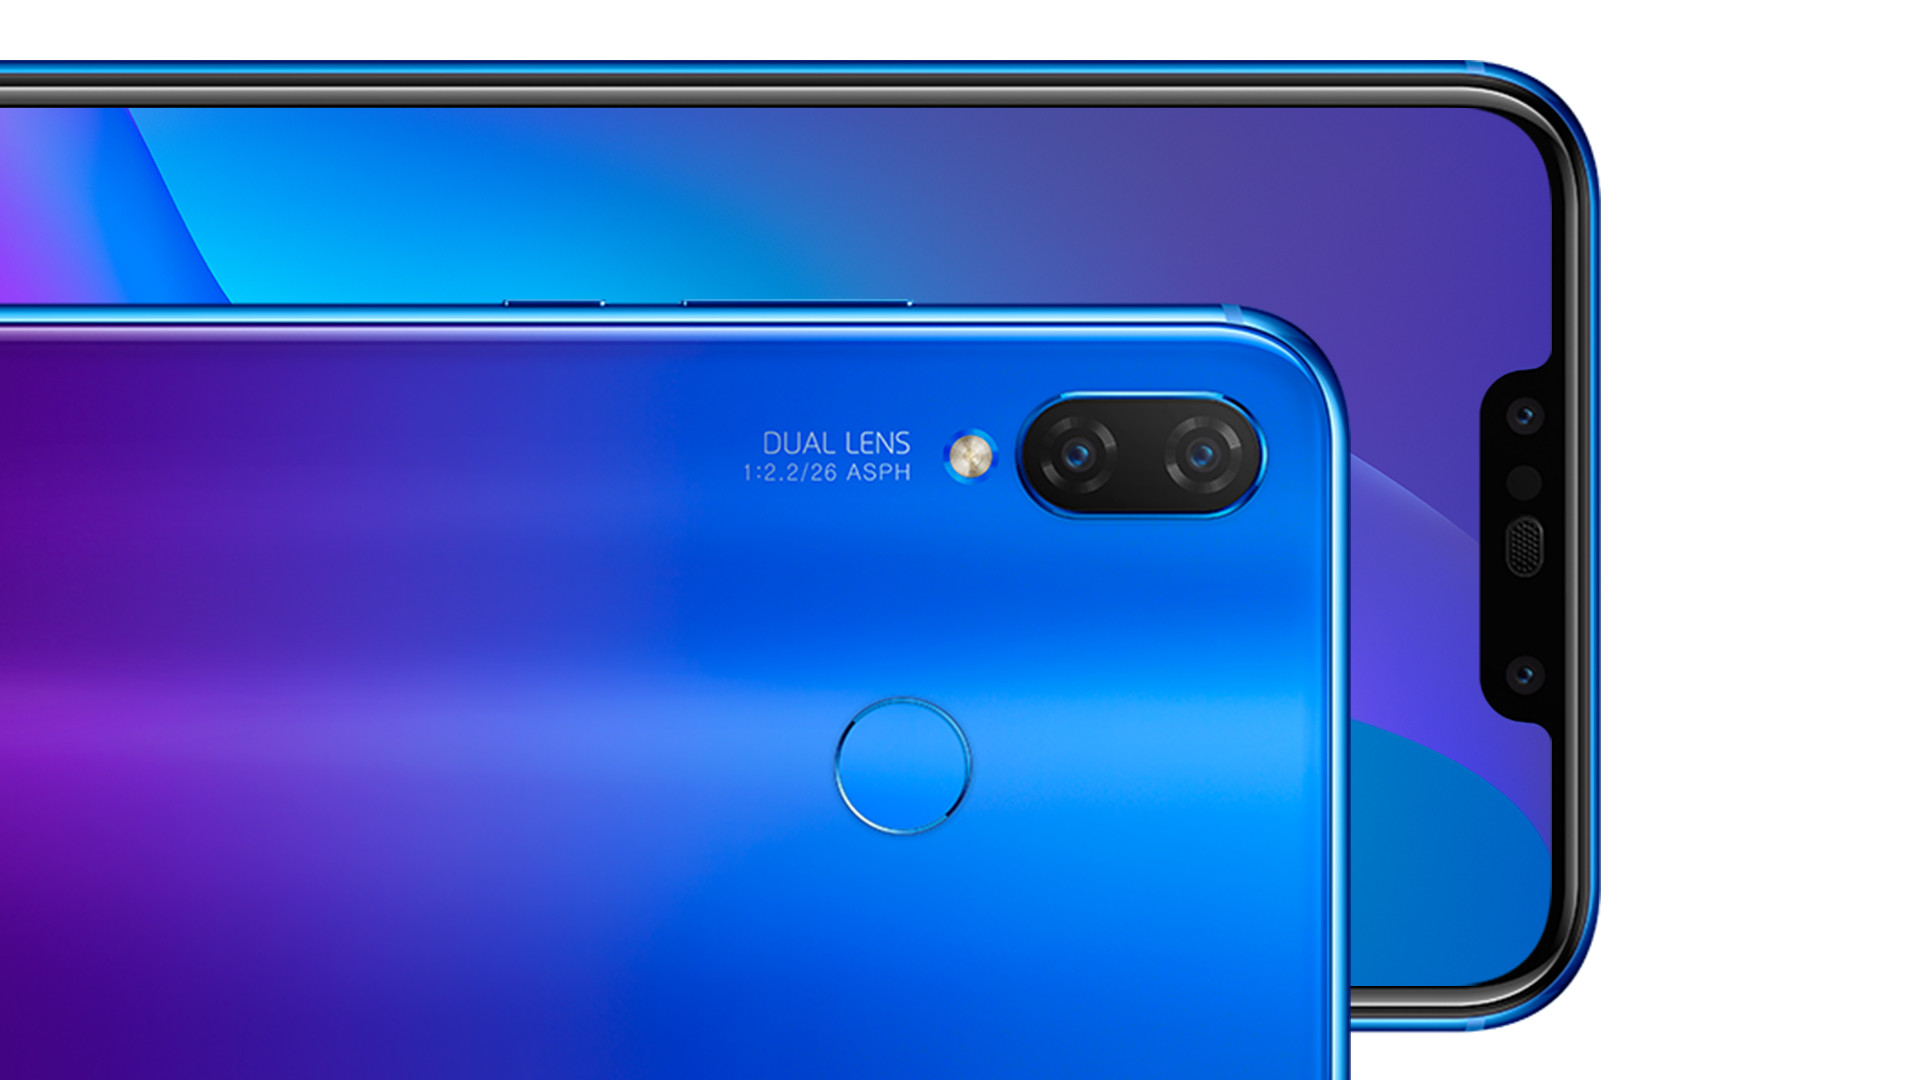 Huawei P Smart Plus 2018 Smartphone Review Notebookcheck Net